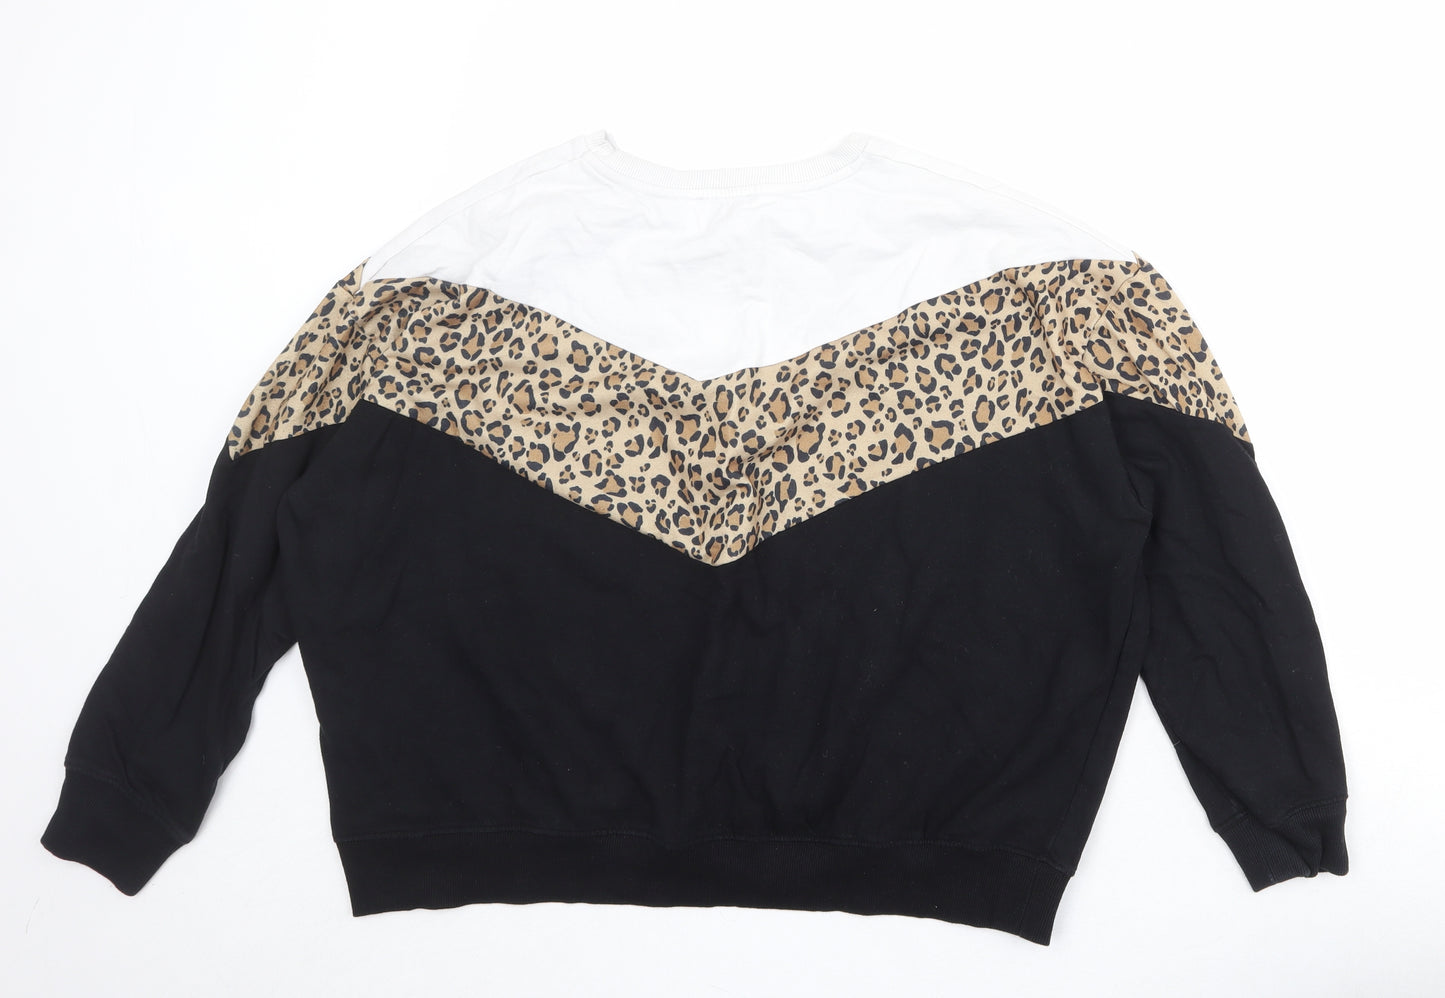 New Look Womens Black Animal Print Cotton Pullover Sweatshirt Size L Pullover - Leopard Print